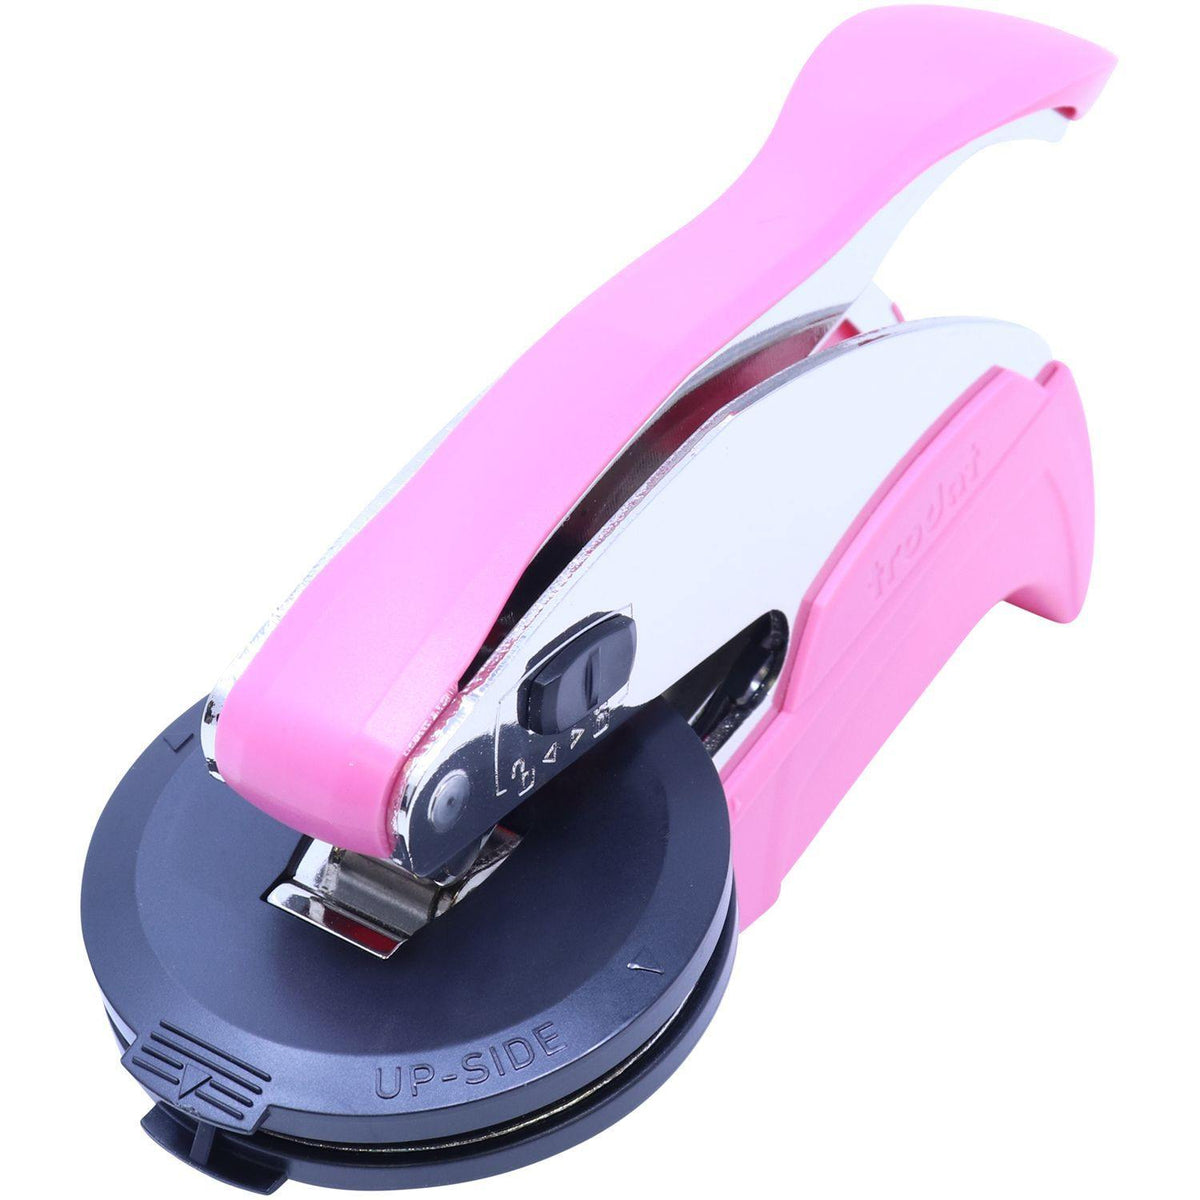 Geologist Pink Hybrid Handheld Embosser - Engineer Seal Stamps - Embosser Type_Handheld, Embosser Type_Hybrid, Type of Use_Professional